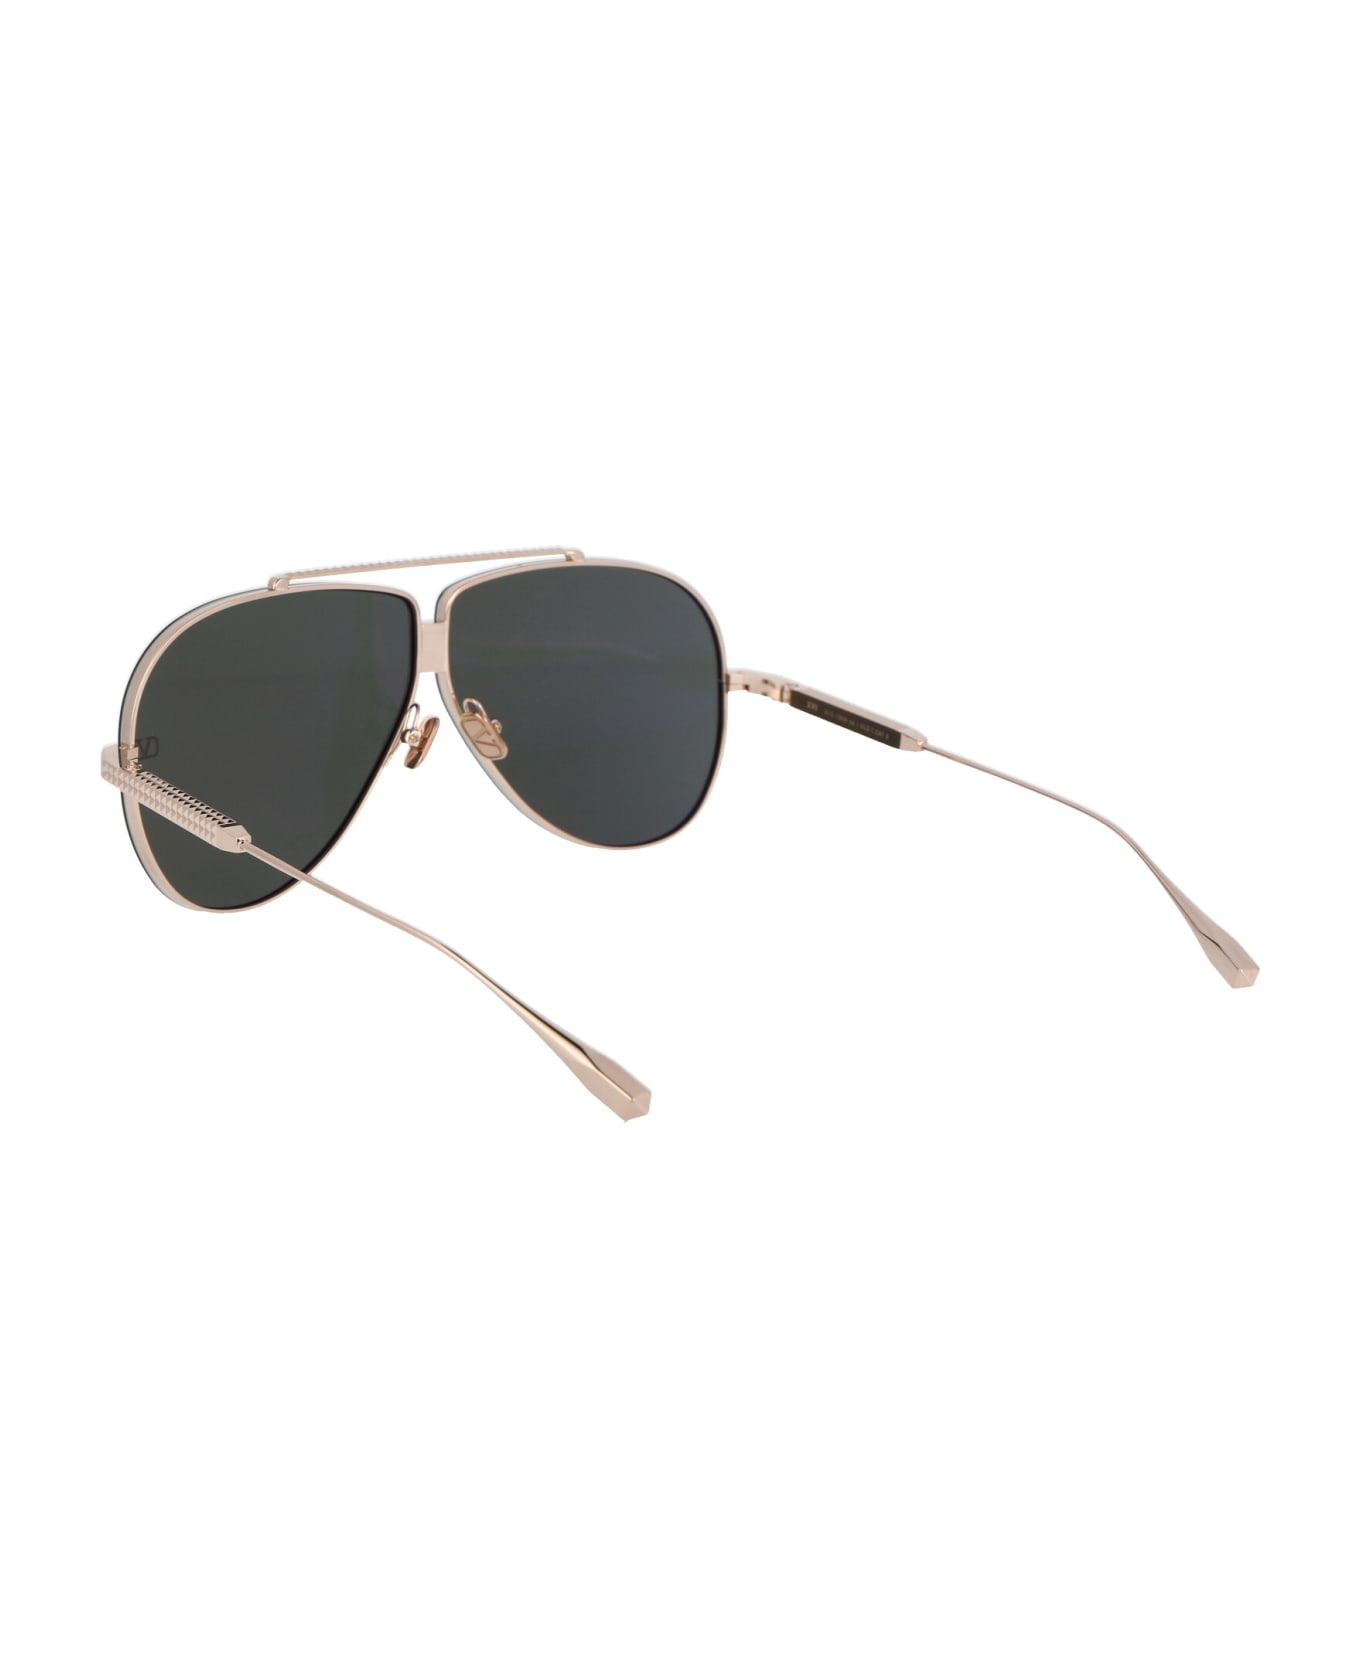 Valentino Eyewear Xvi Sunglasses - WHITE GOLD W/ G-15 GOLD FLASH MIRROR